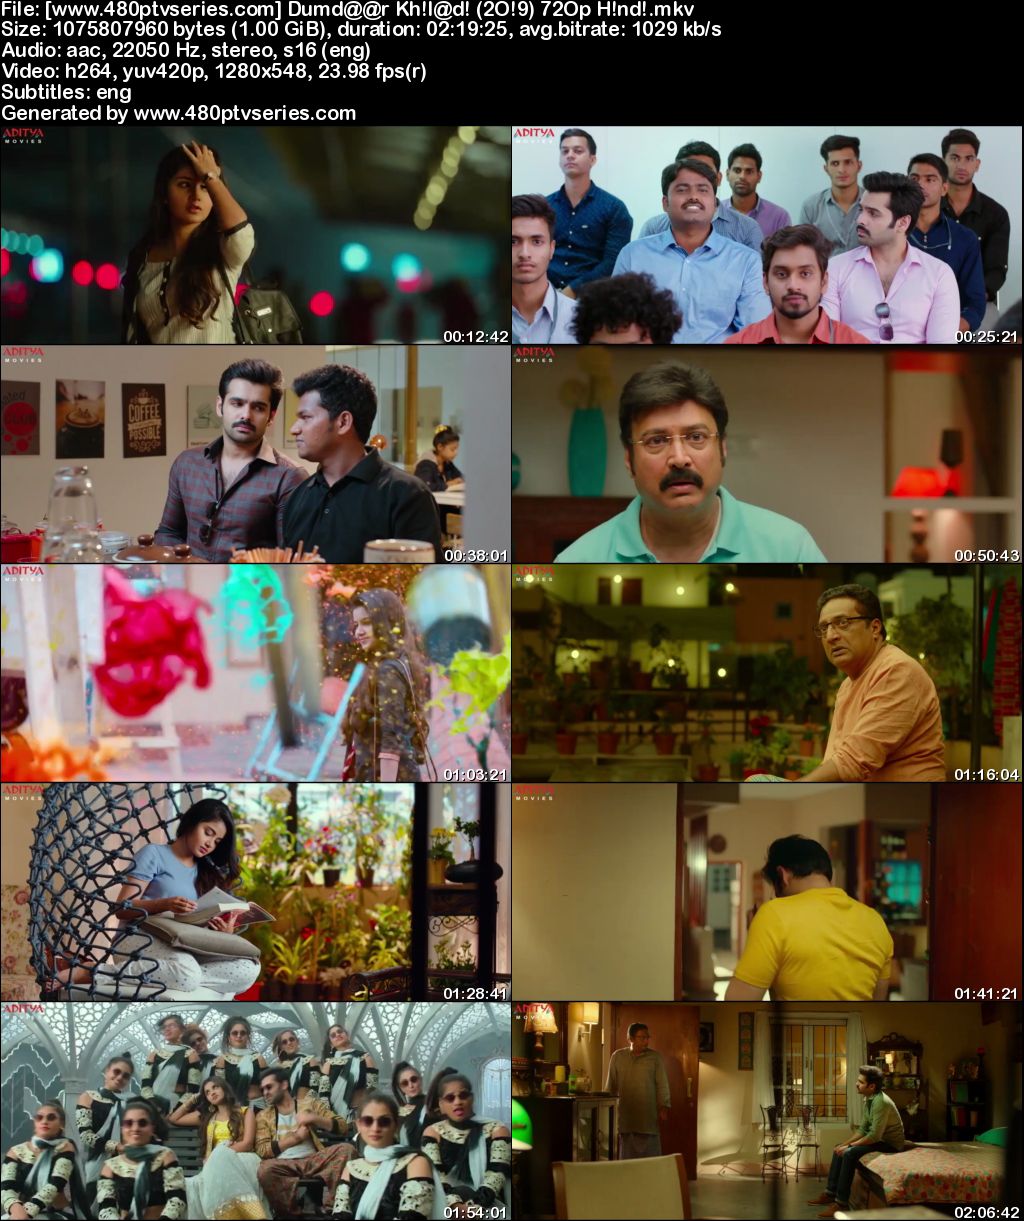 Watch Online Free Dumdaar Khiladi (2019) Full Hindi Dubbed Movie Download 480p 720p HDRip